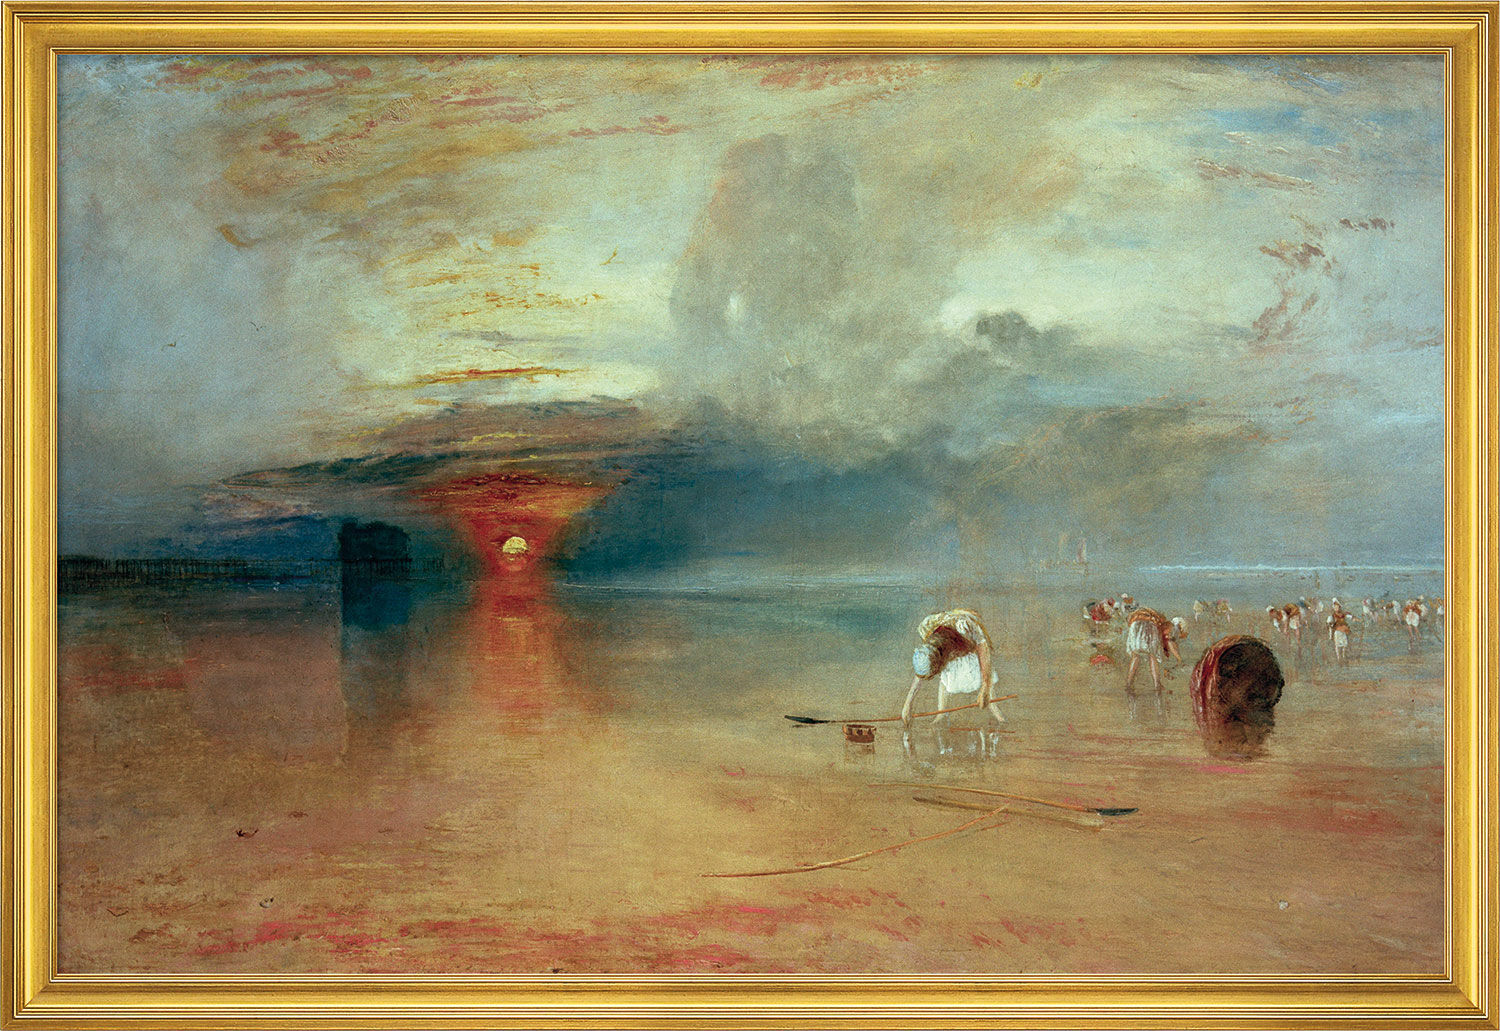 Tableau "Calais Beach" (1830), encadré von William Turner